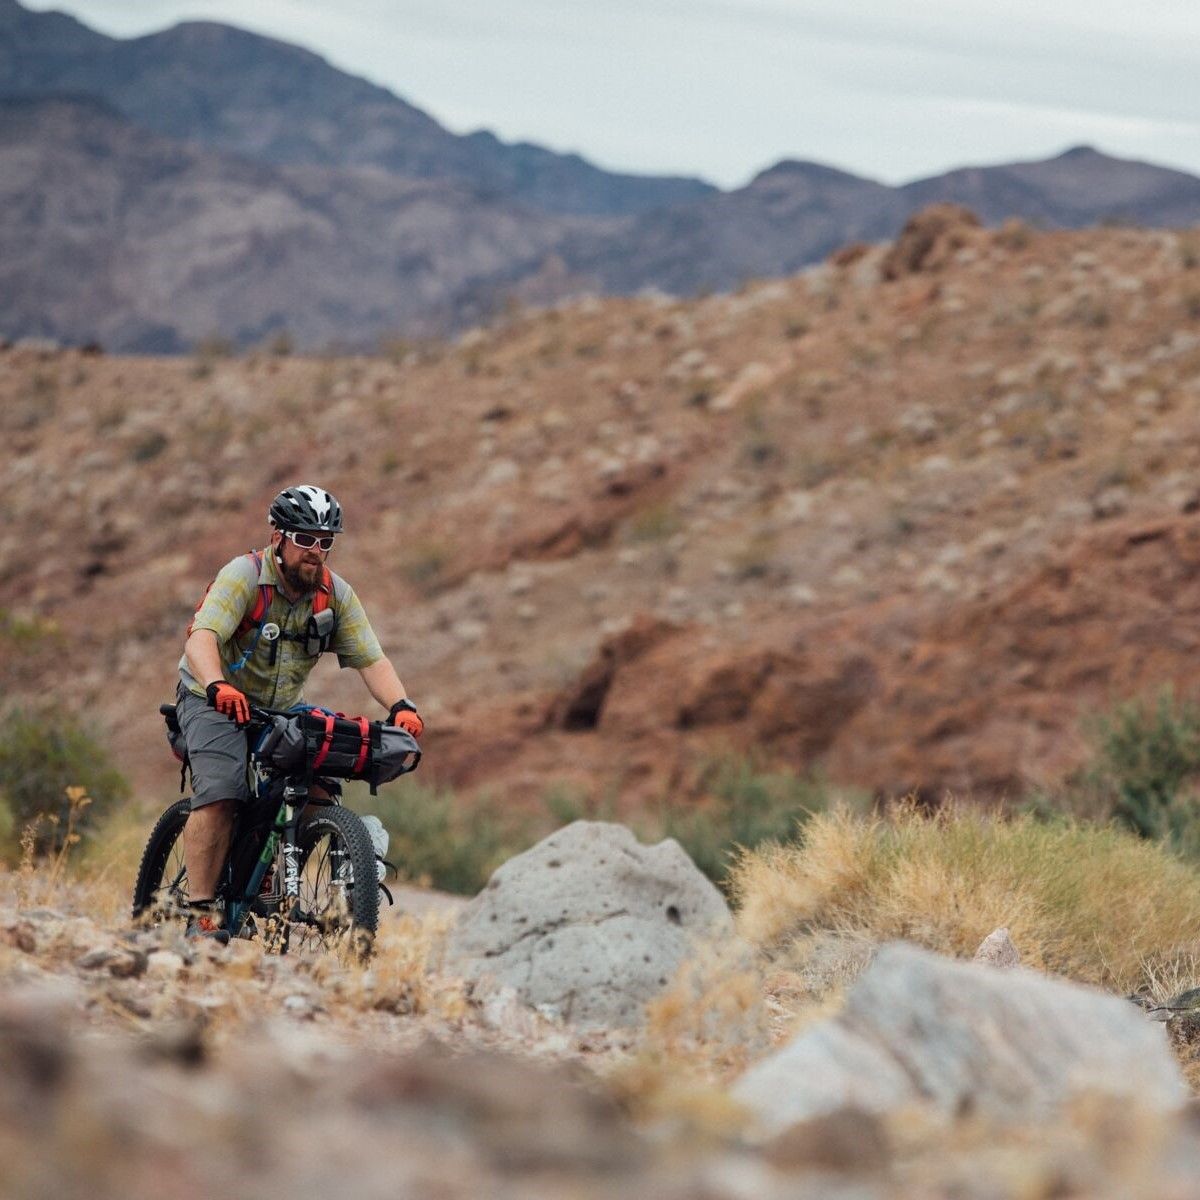 All Kids Bike ambassador Chad Pickard rides a mountain bike through a rugged mountainscape